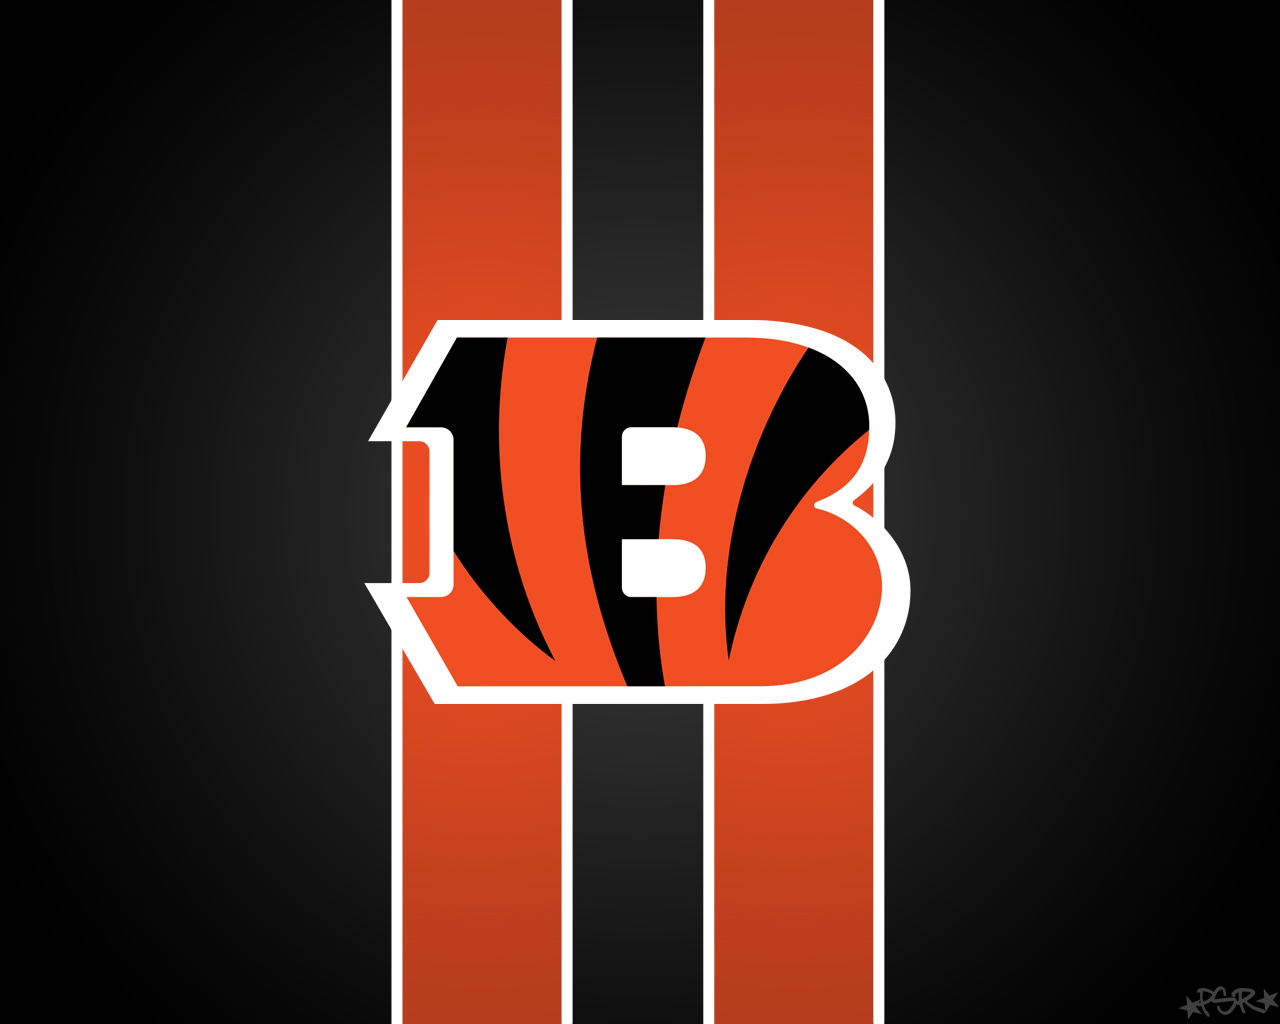 Free download The Ultimate Cincinnati Bengals Desktop Wallpaper